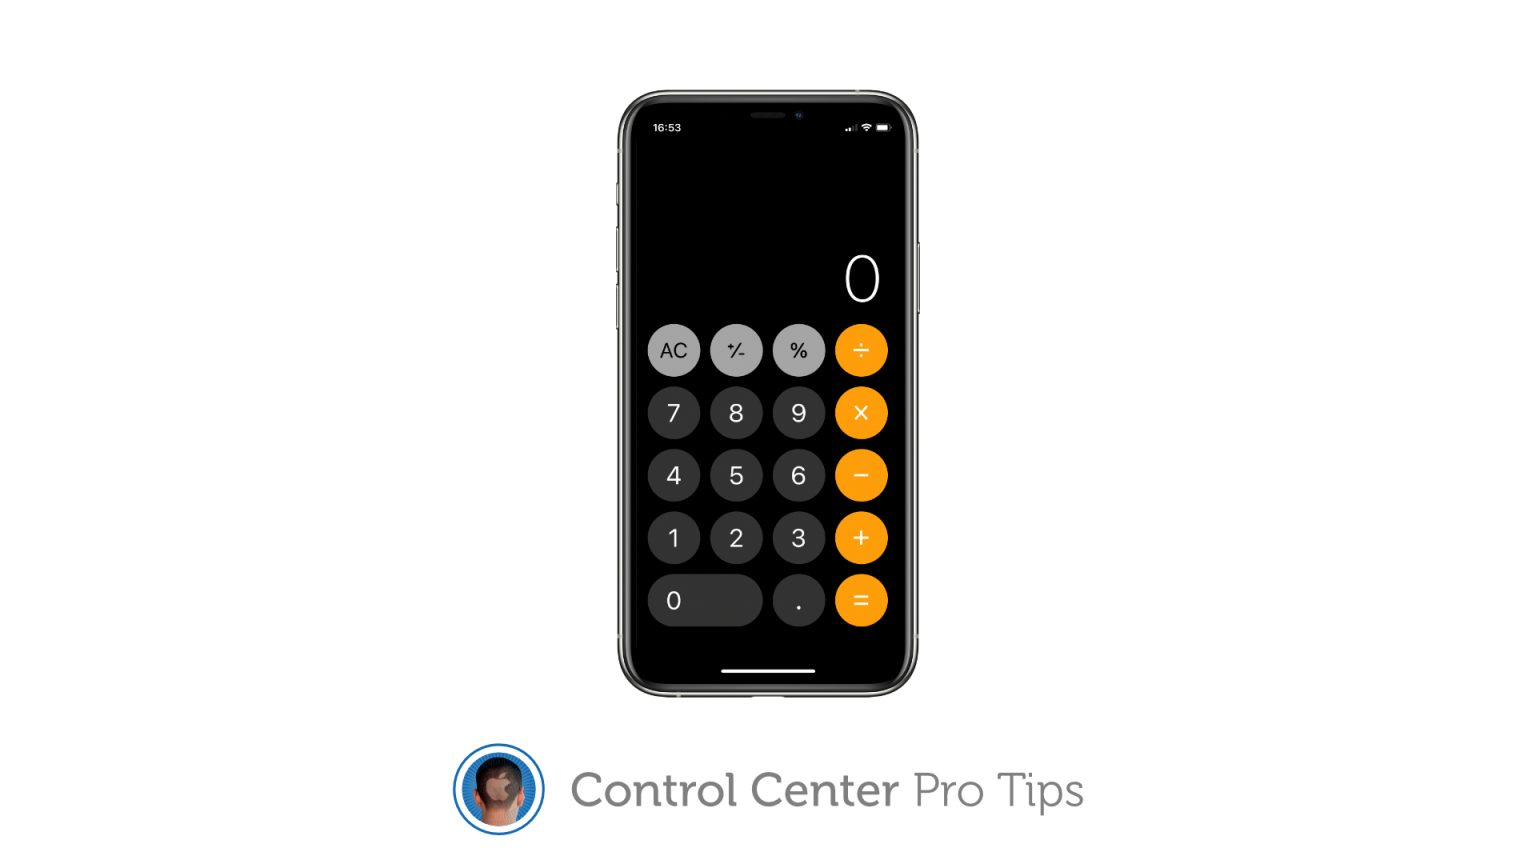 Add the Calculator app to Control Center